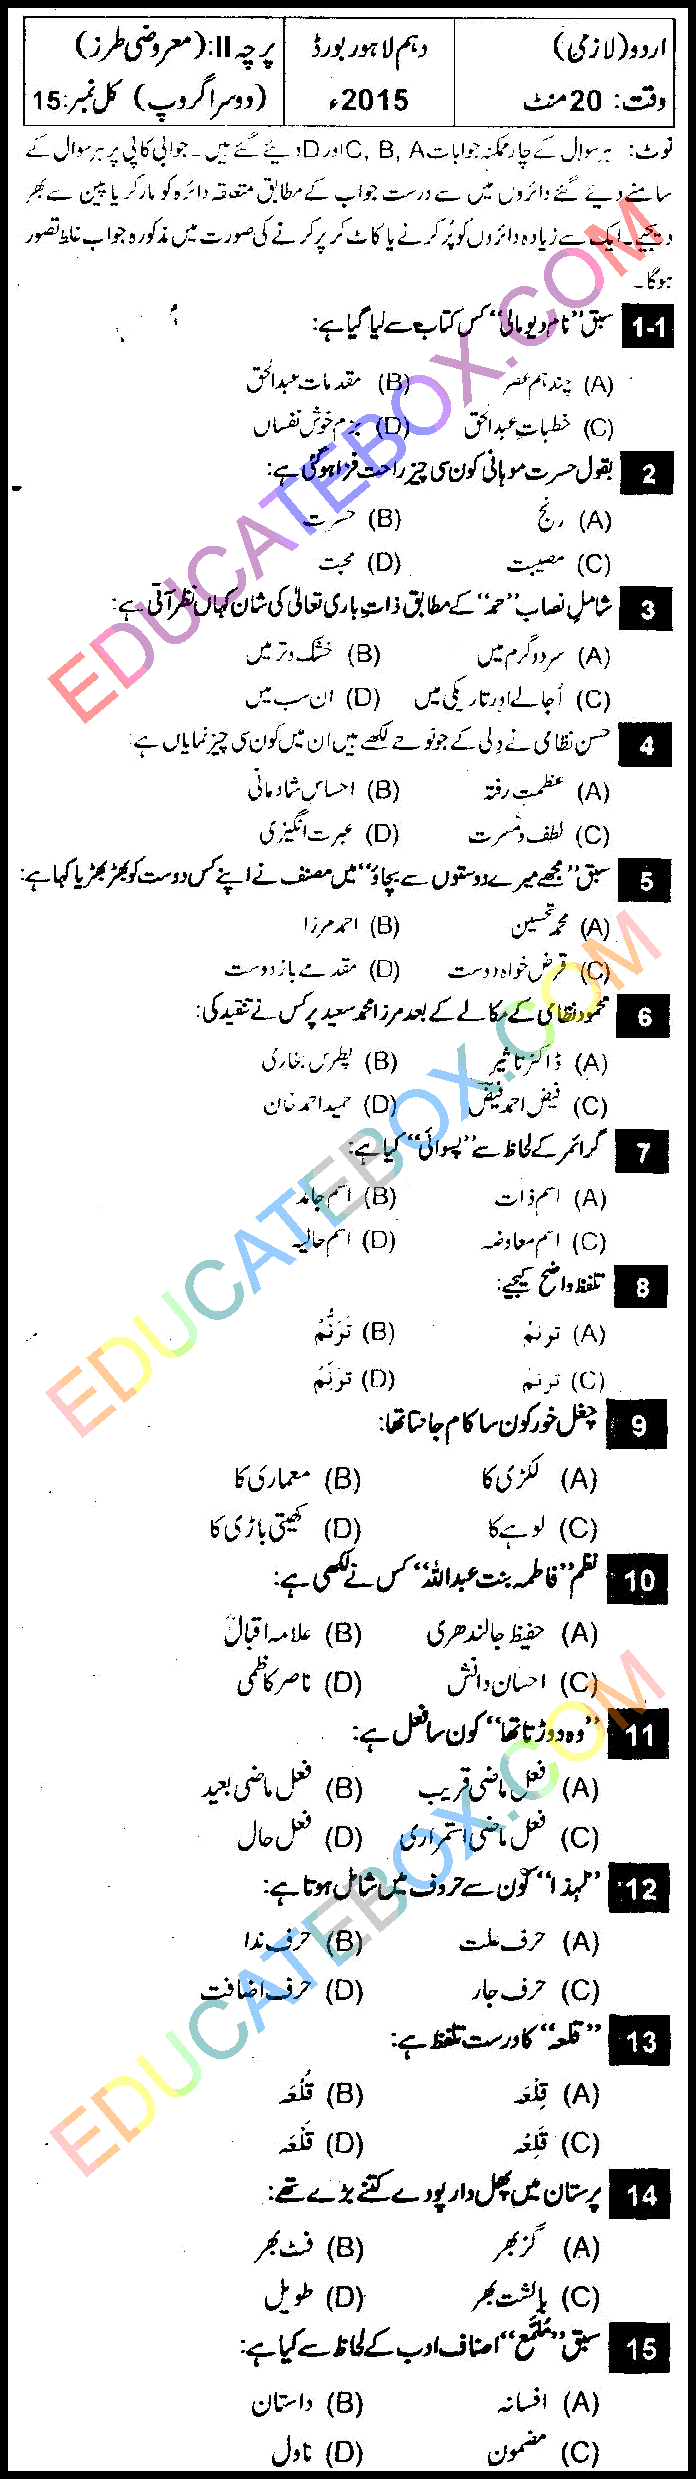 اپ ٹو ڈیٹ پیپر اردو 2015 دوسرا گروپ جماعت دہم لاہور بورڈ معروضی طرز Past Paper Class 10 Urdu Lahore Board 2015 Objective Type Group 2